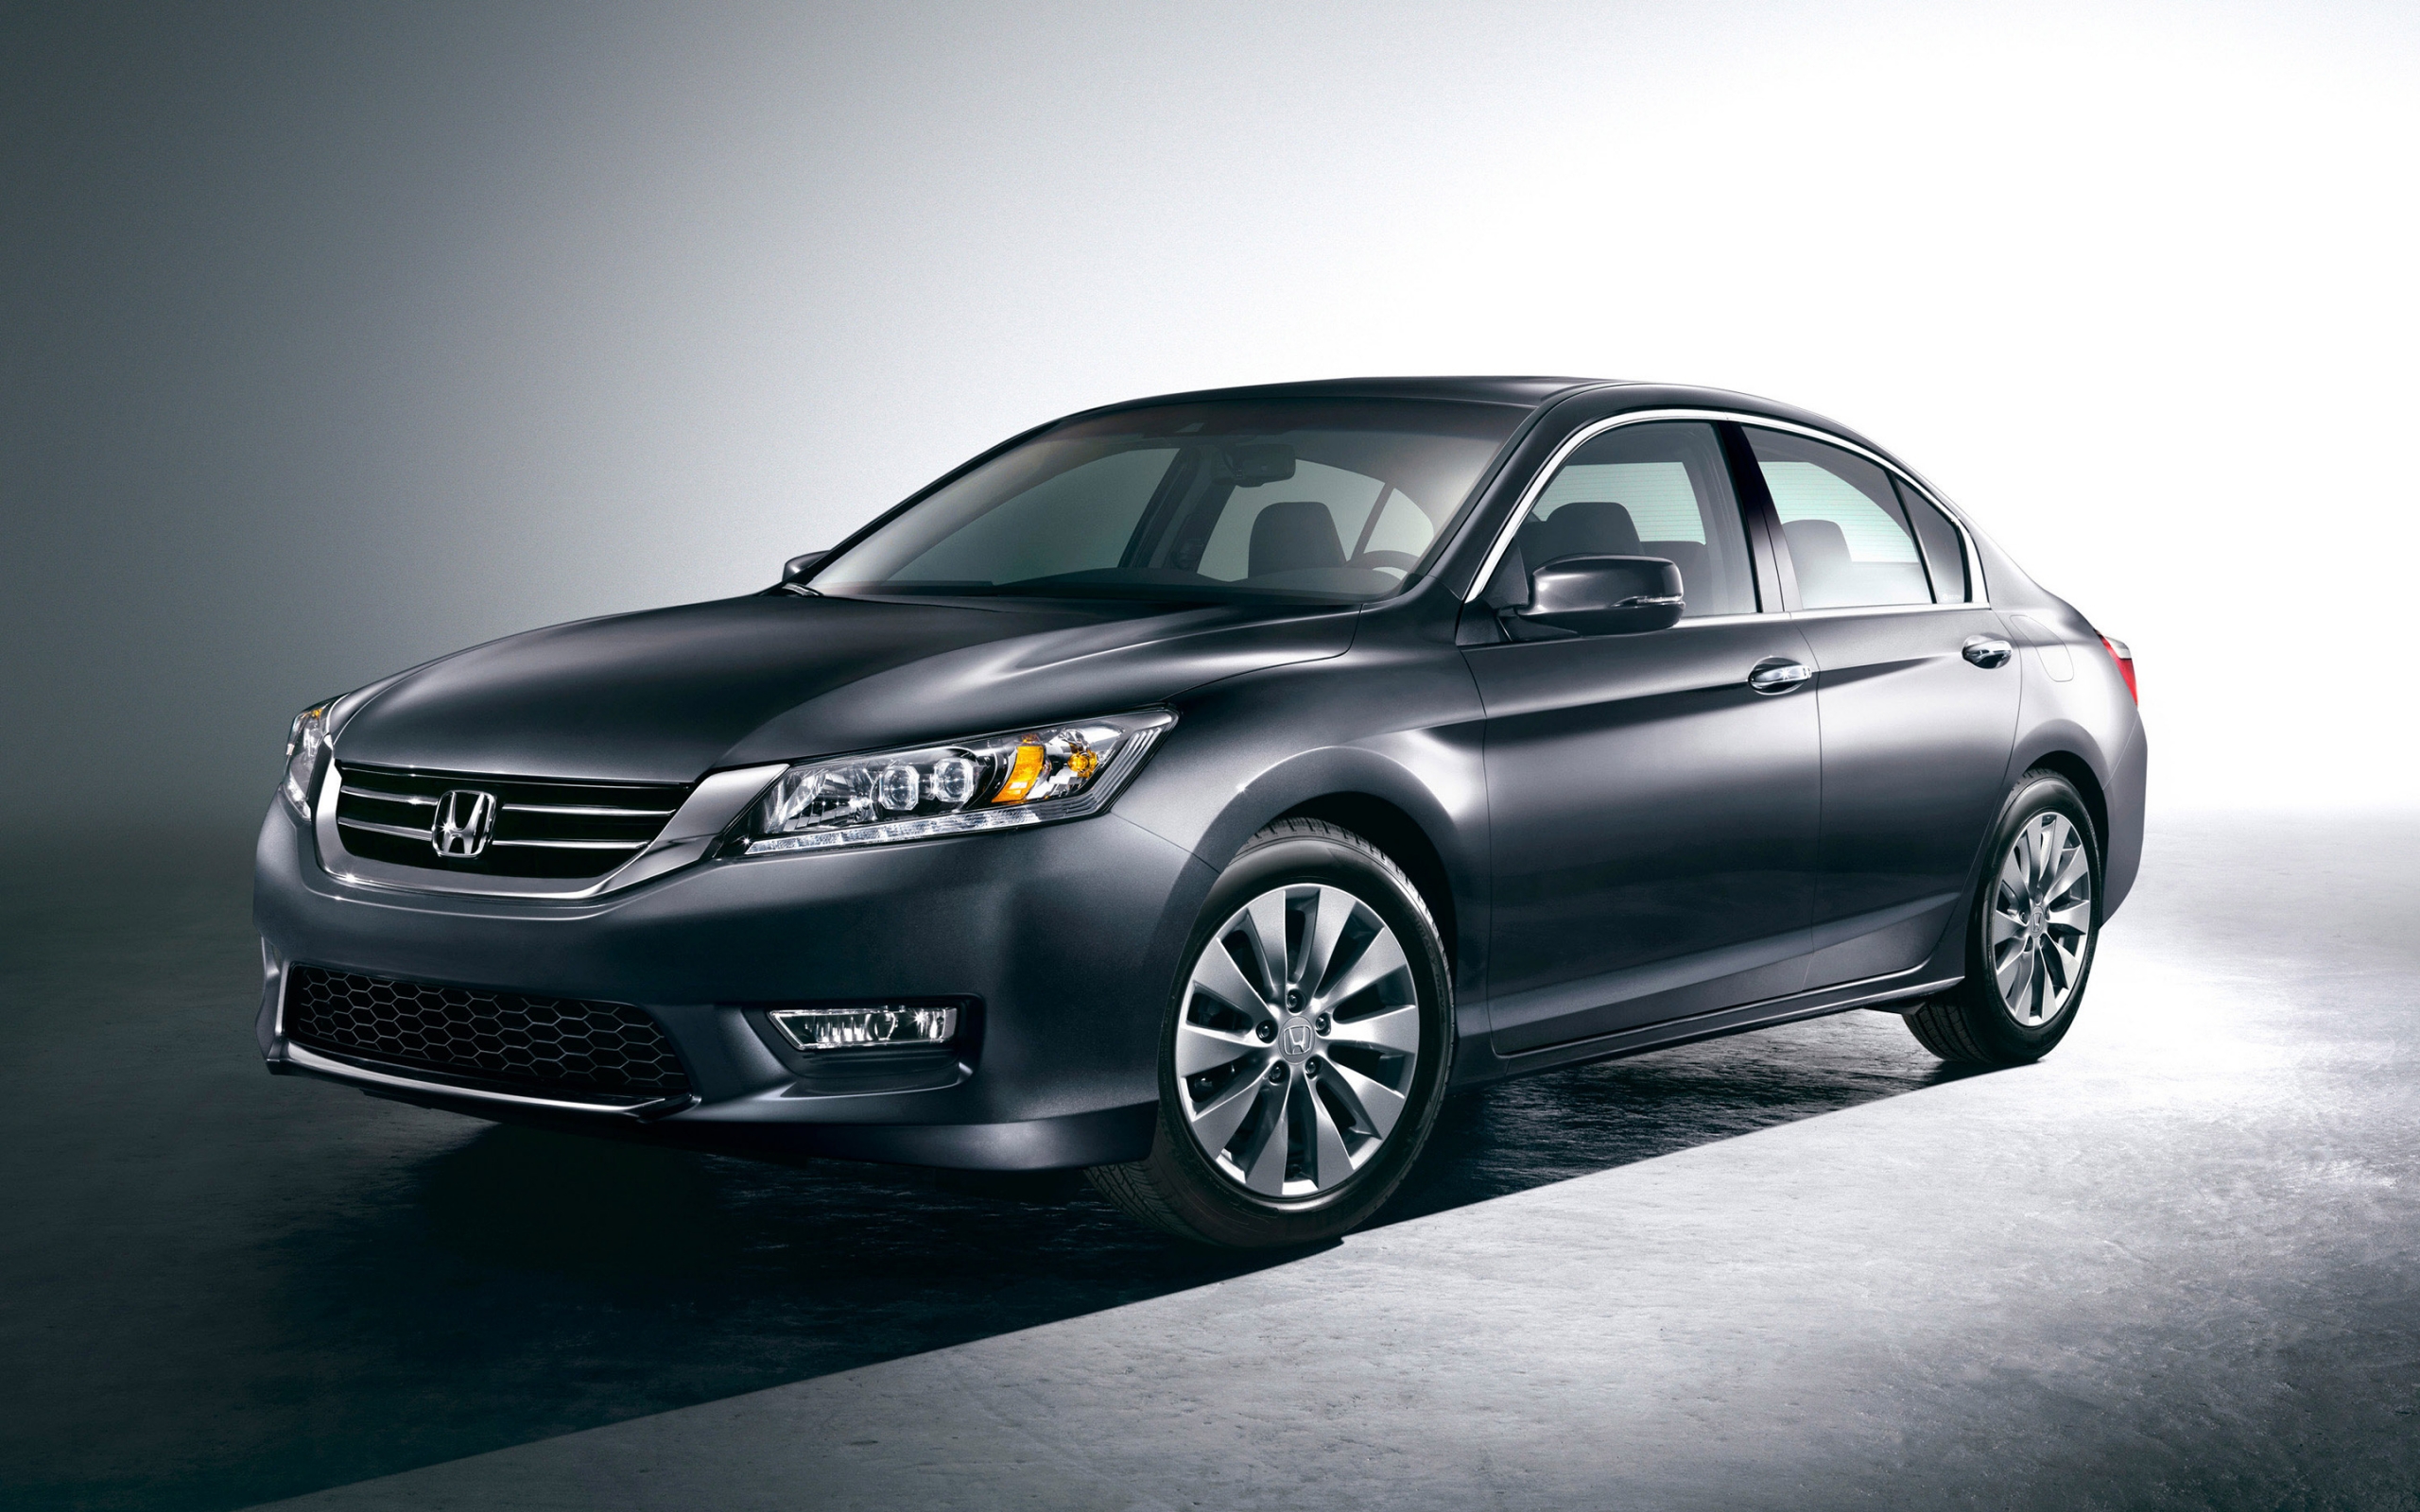 2013 Honda Accord for 2560 x 1600 widescreen resolution